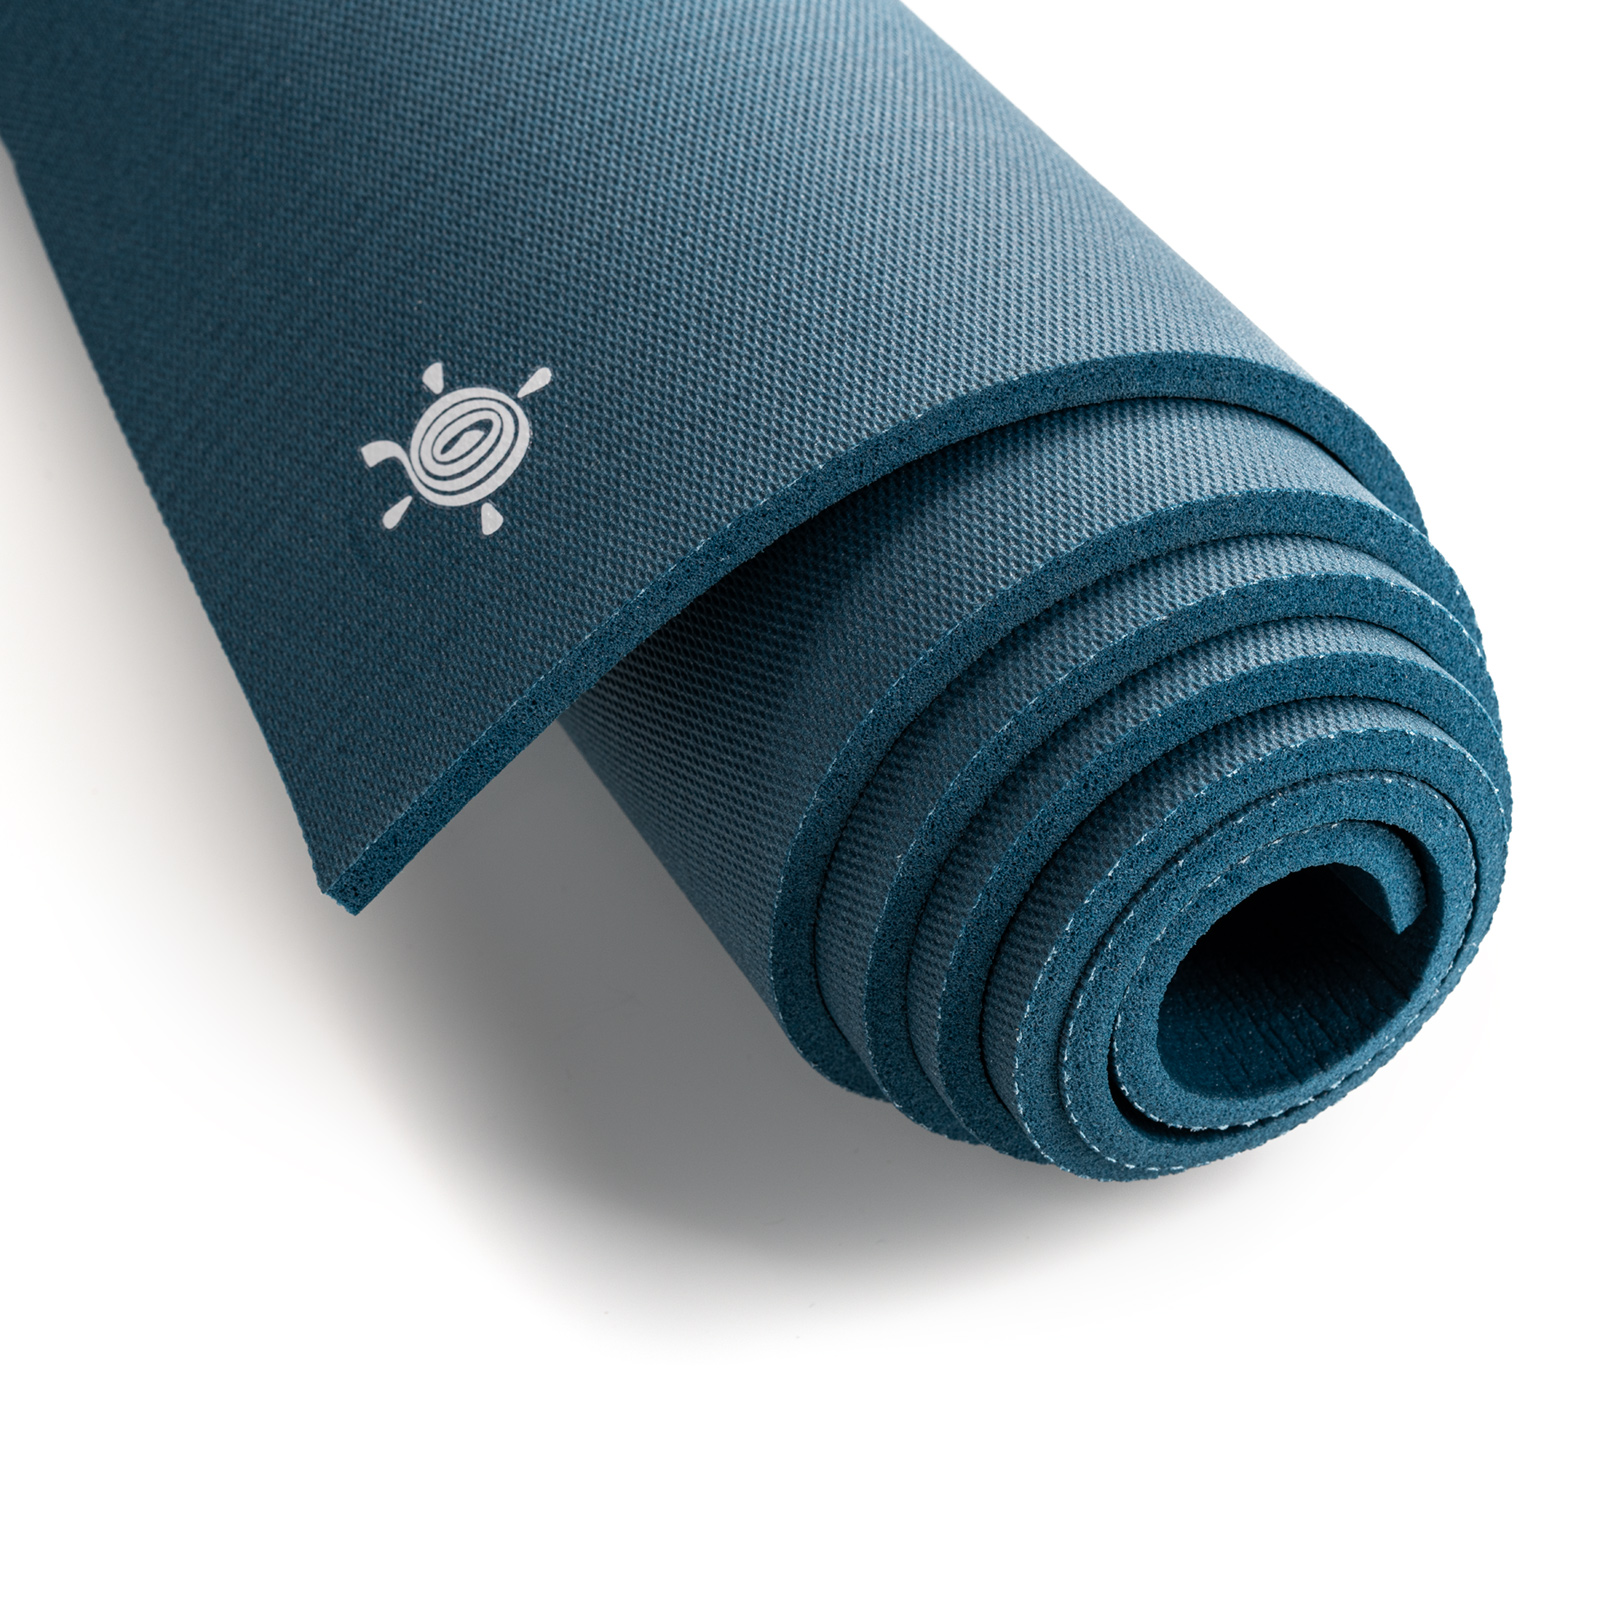 CORE Yoga mat - KURMA Yoga - sustainably made in Europe